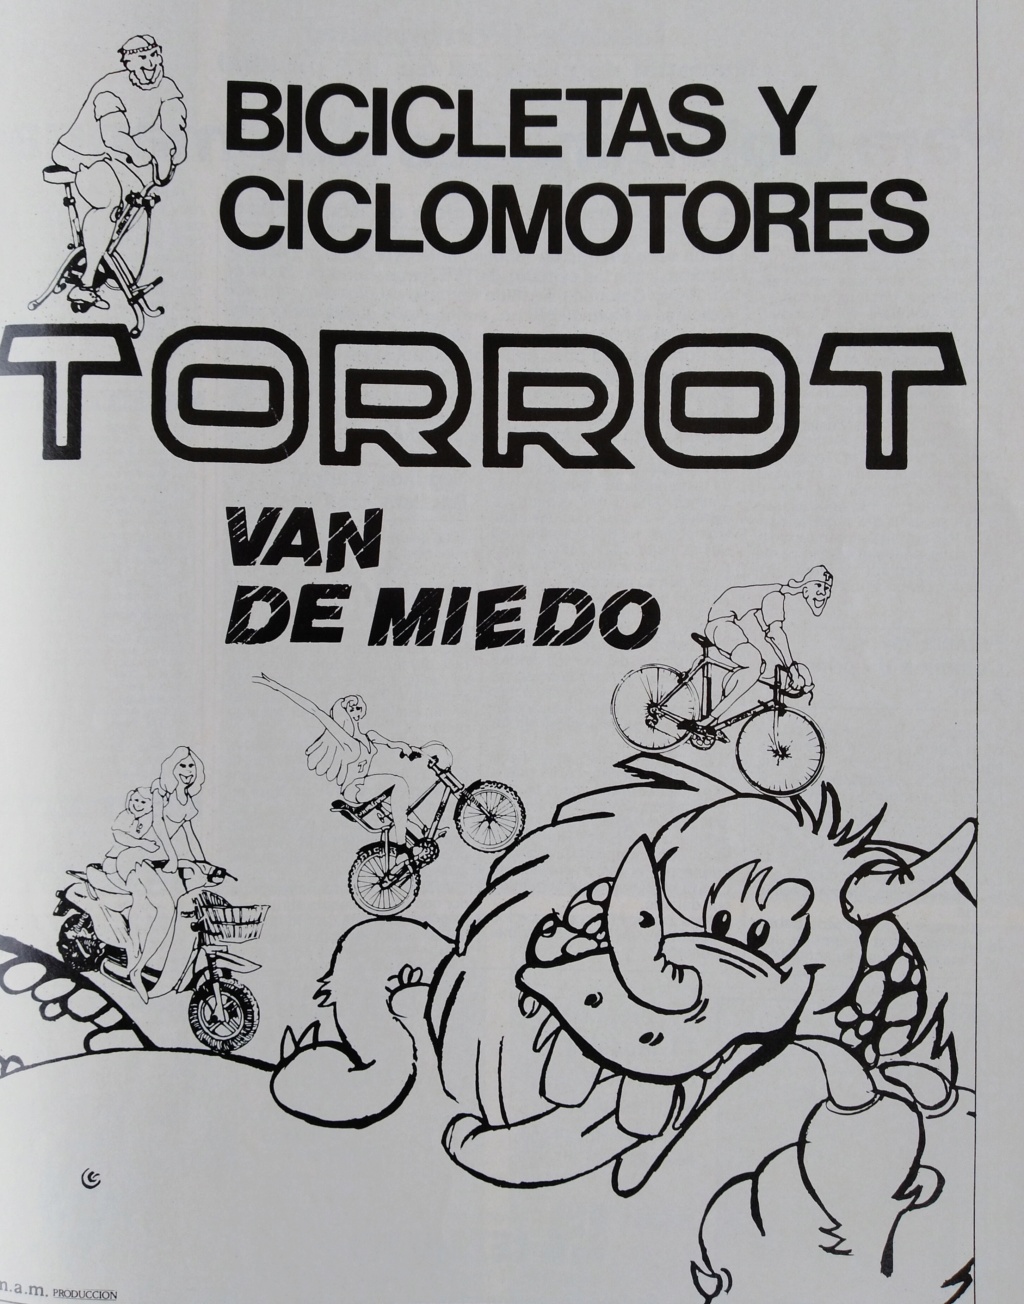 Ciclomotor Torrot Ciclomatic Img_2105